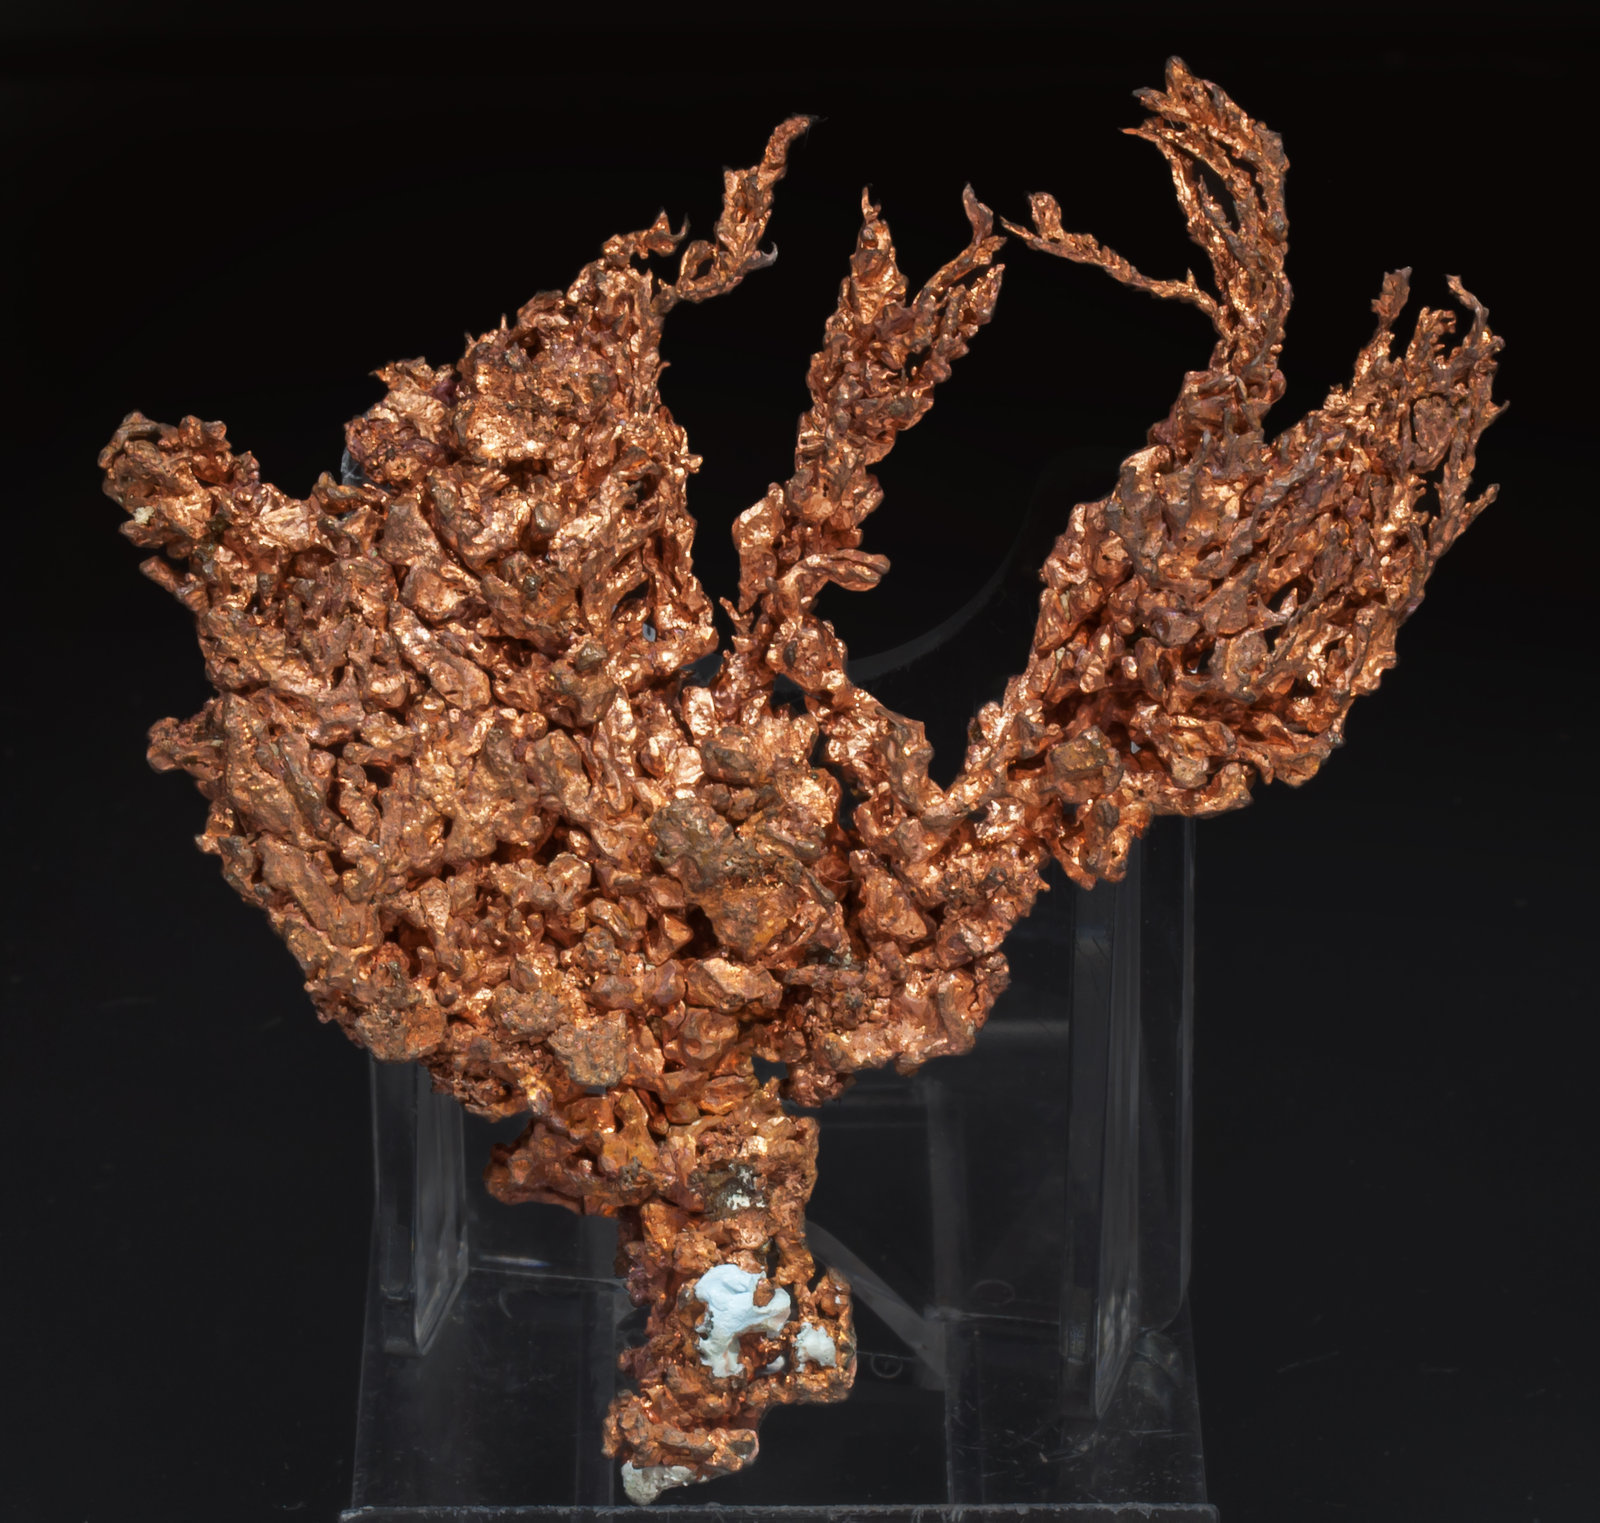 specimens/s_imagesAH6/Copper-TC13AH6f.jpg